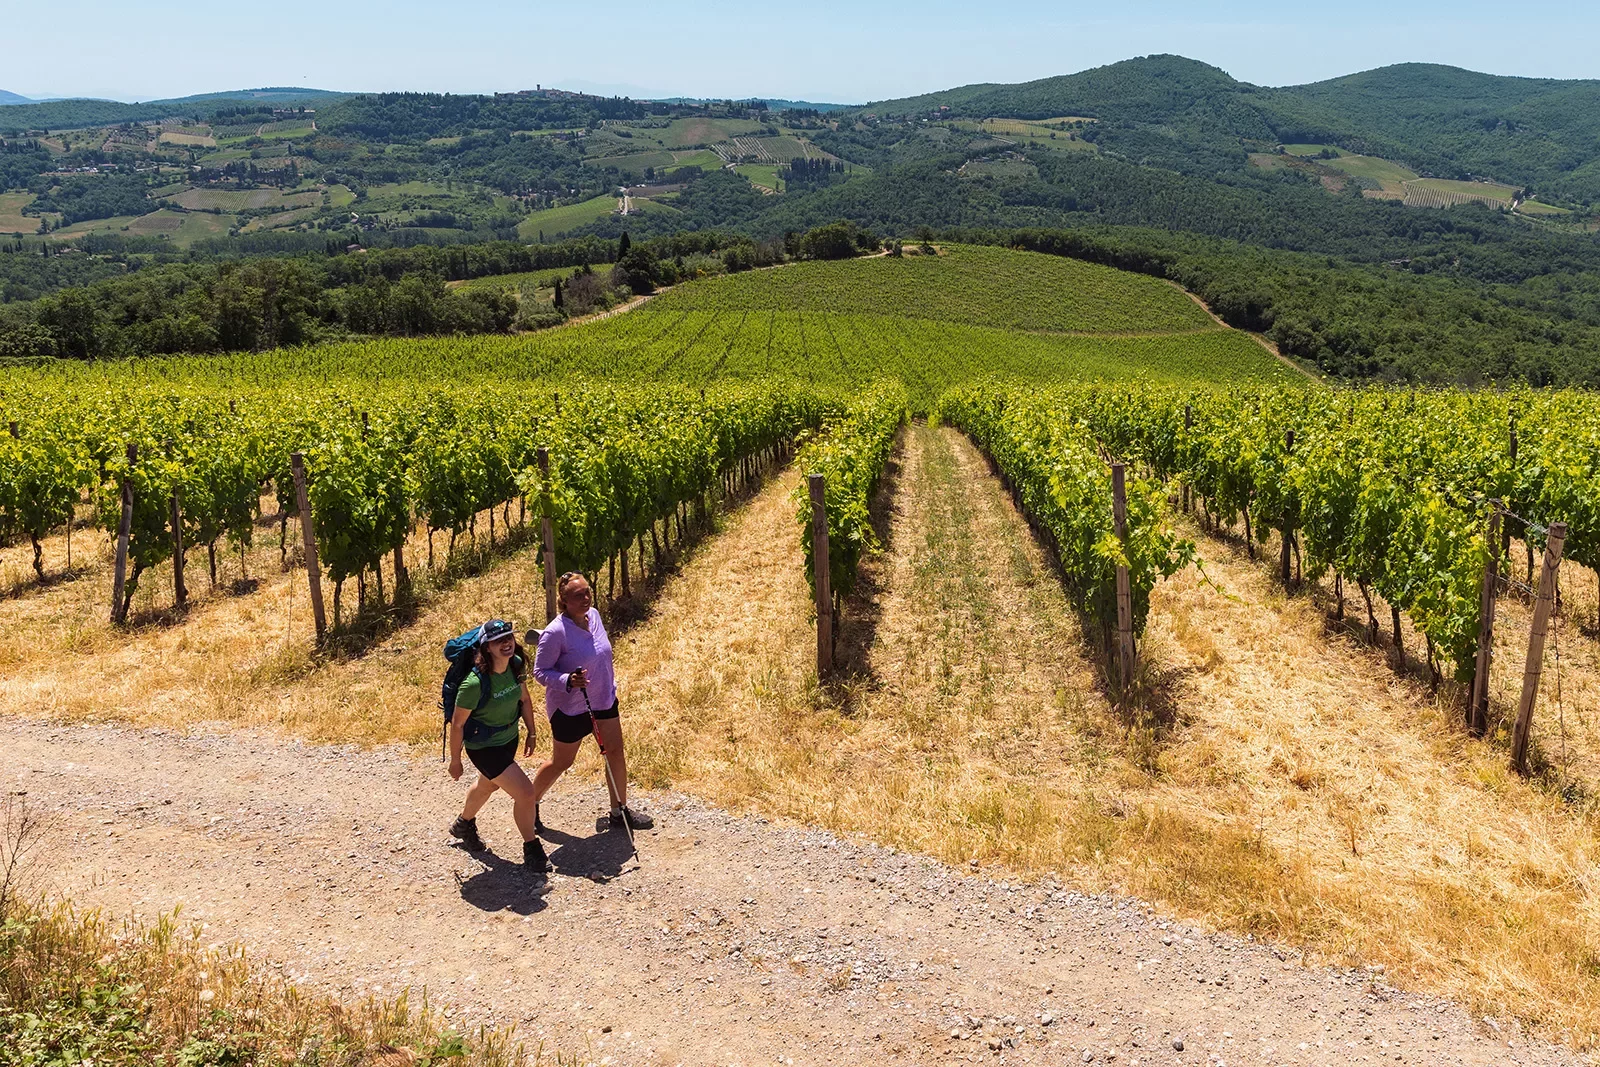 Two guests walking past vineyard, Italian hillside in background.